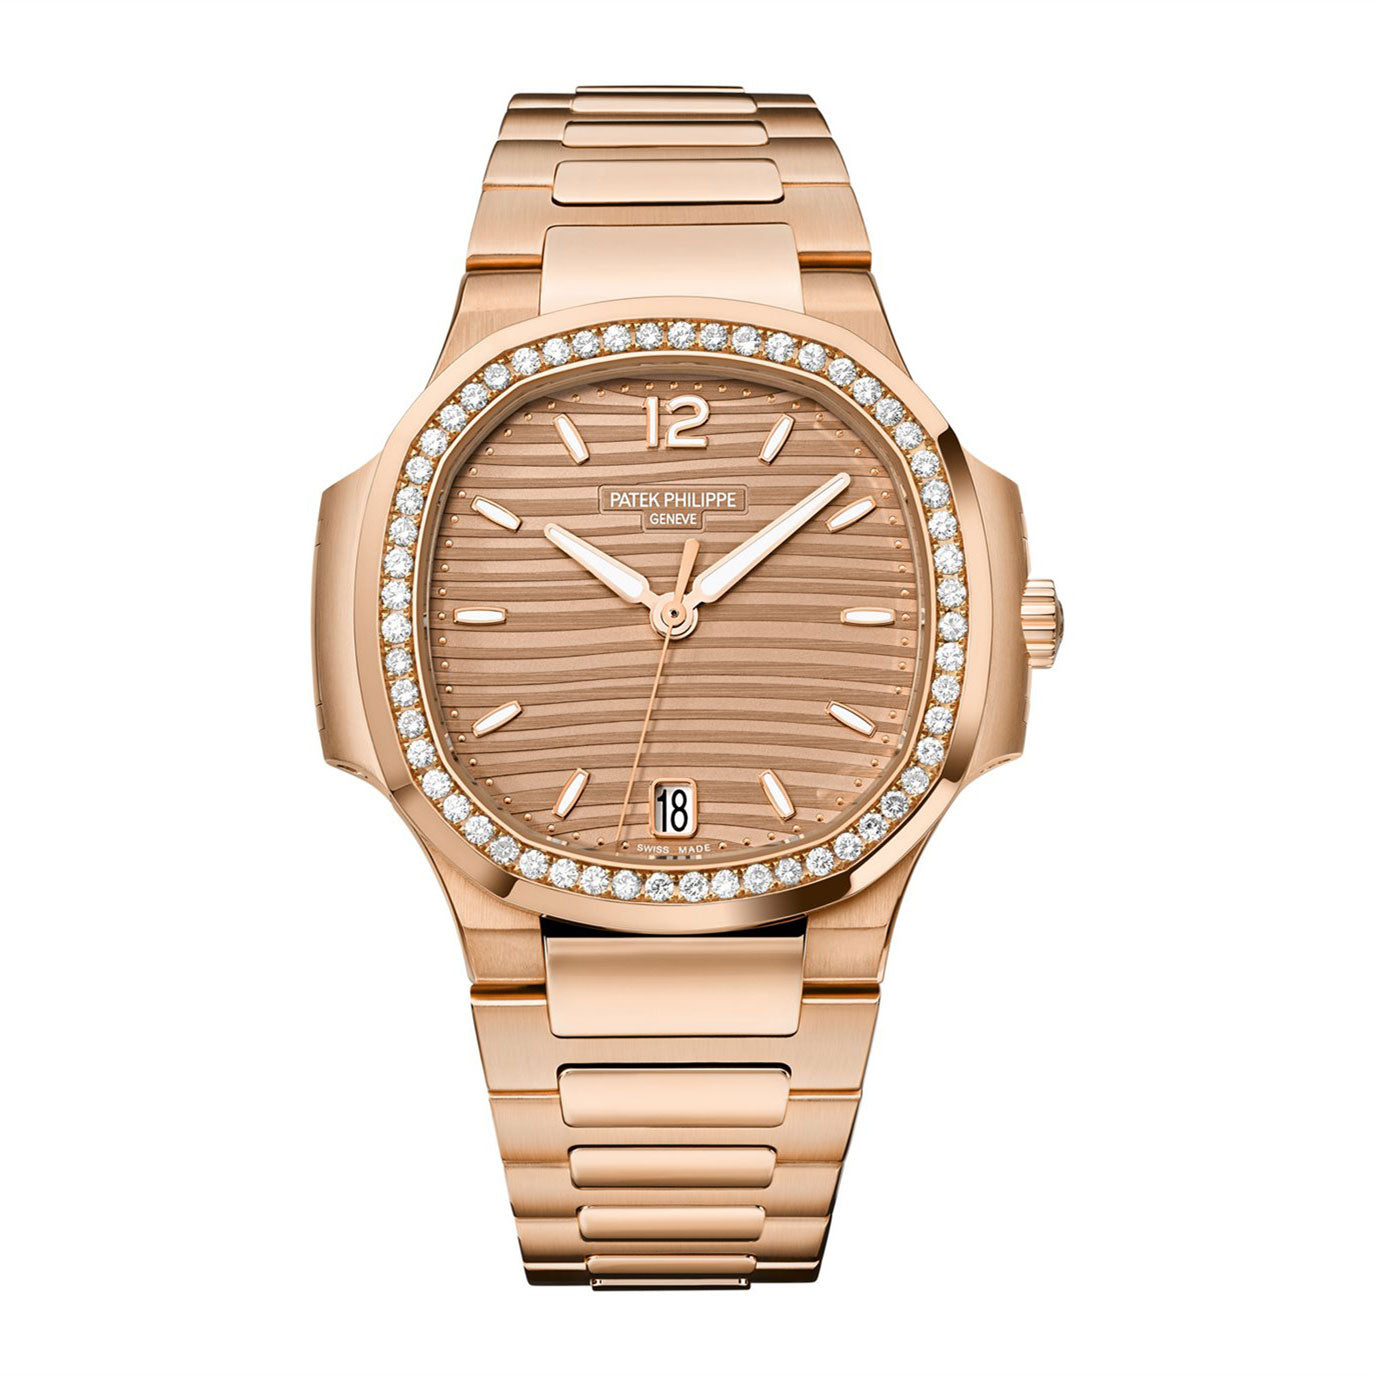 Patek Philippe Nautilus Ladies Automatic Watch, 18k Rose Gold and Diamonds, 35,2mm, Ref# 7118/1200R-010